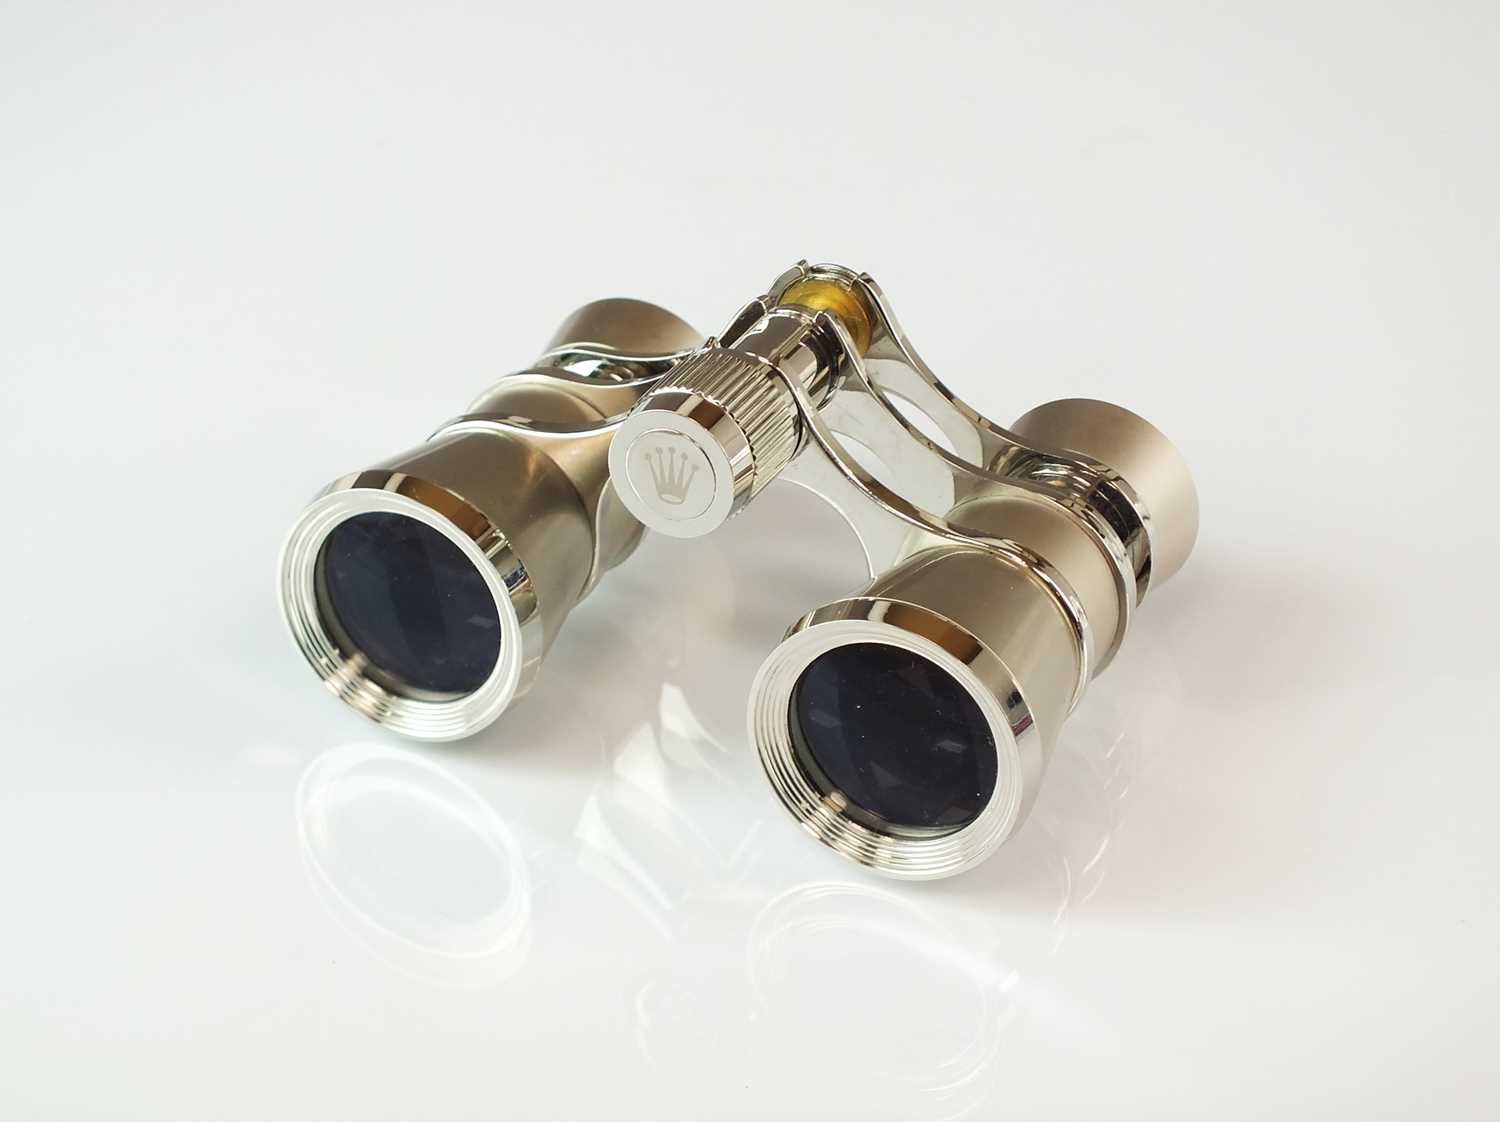 Lot 54 - A pair of Rolex event binoculars